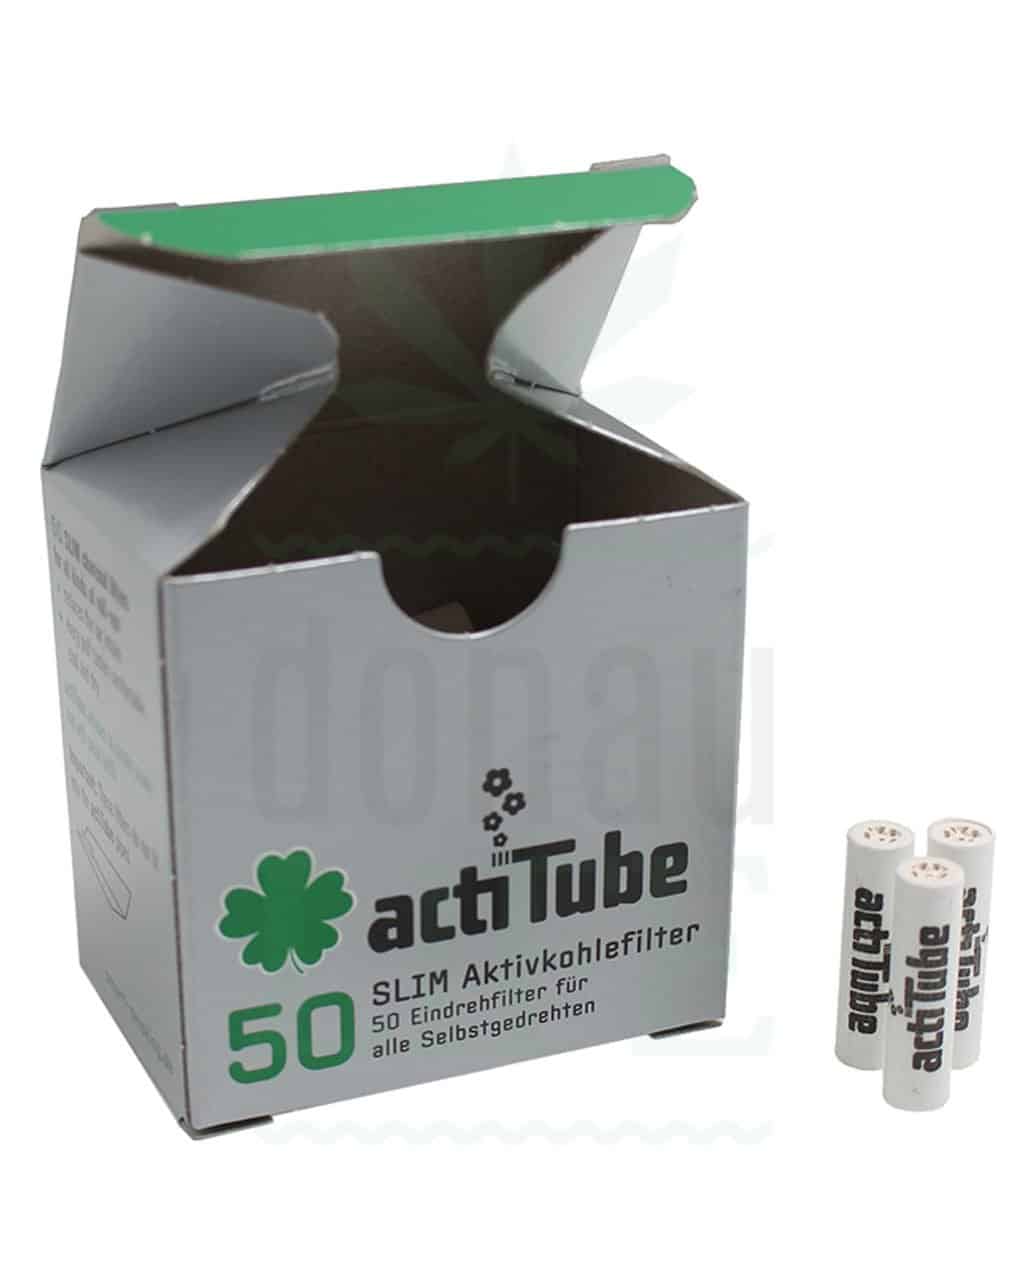 50 Stück ActiTube Slim Aktivkohle Filter zum Eindrehen Neu Aktivkohlefilter 